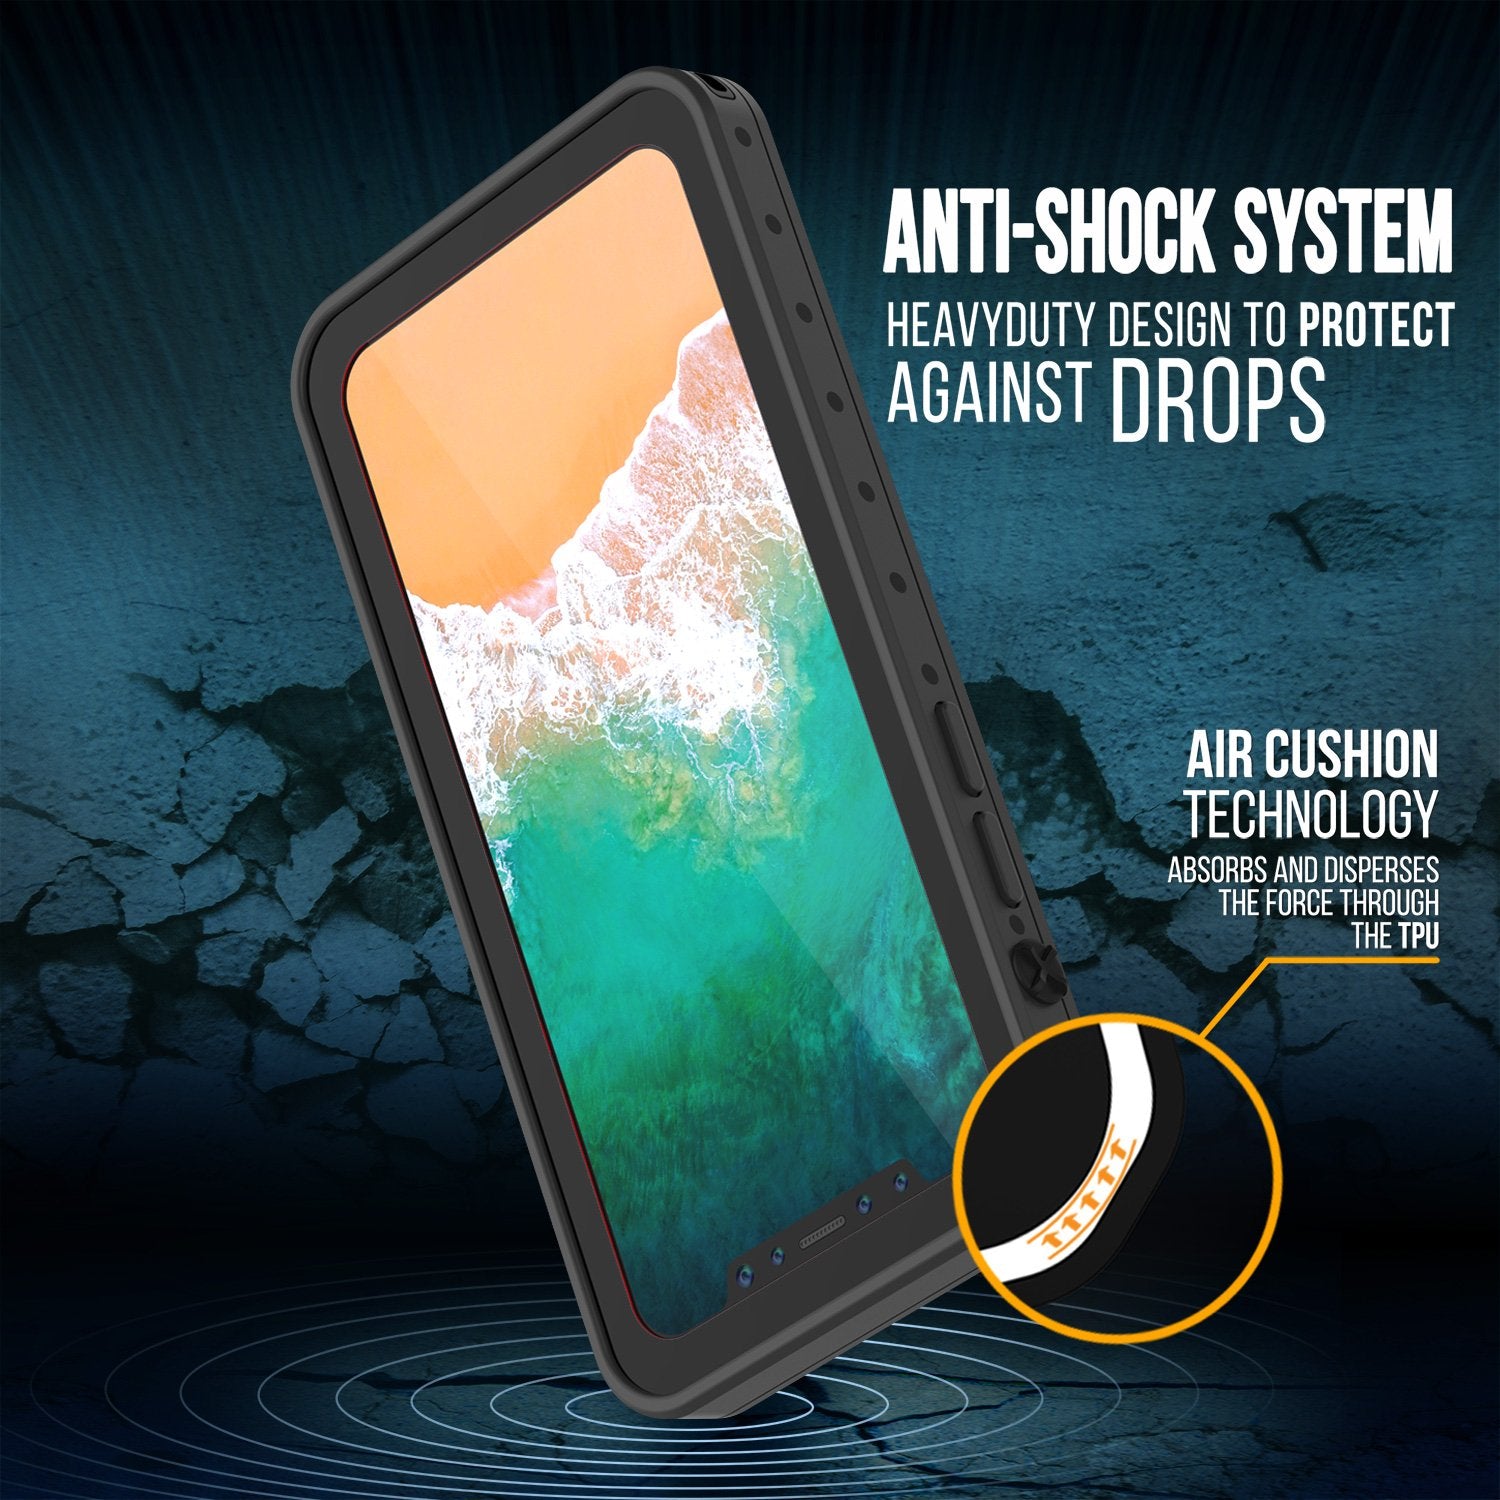 iPhone X Plus Waterproof Case, Punkcase StudStar Series Cover, Clear